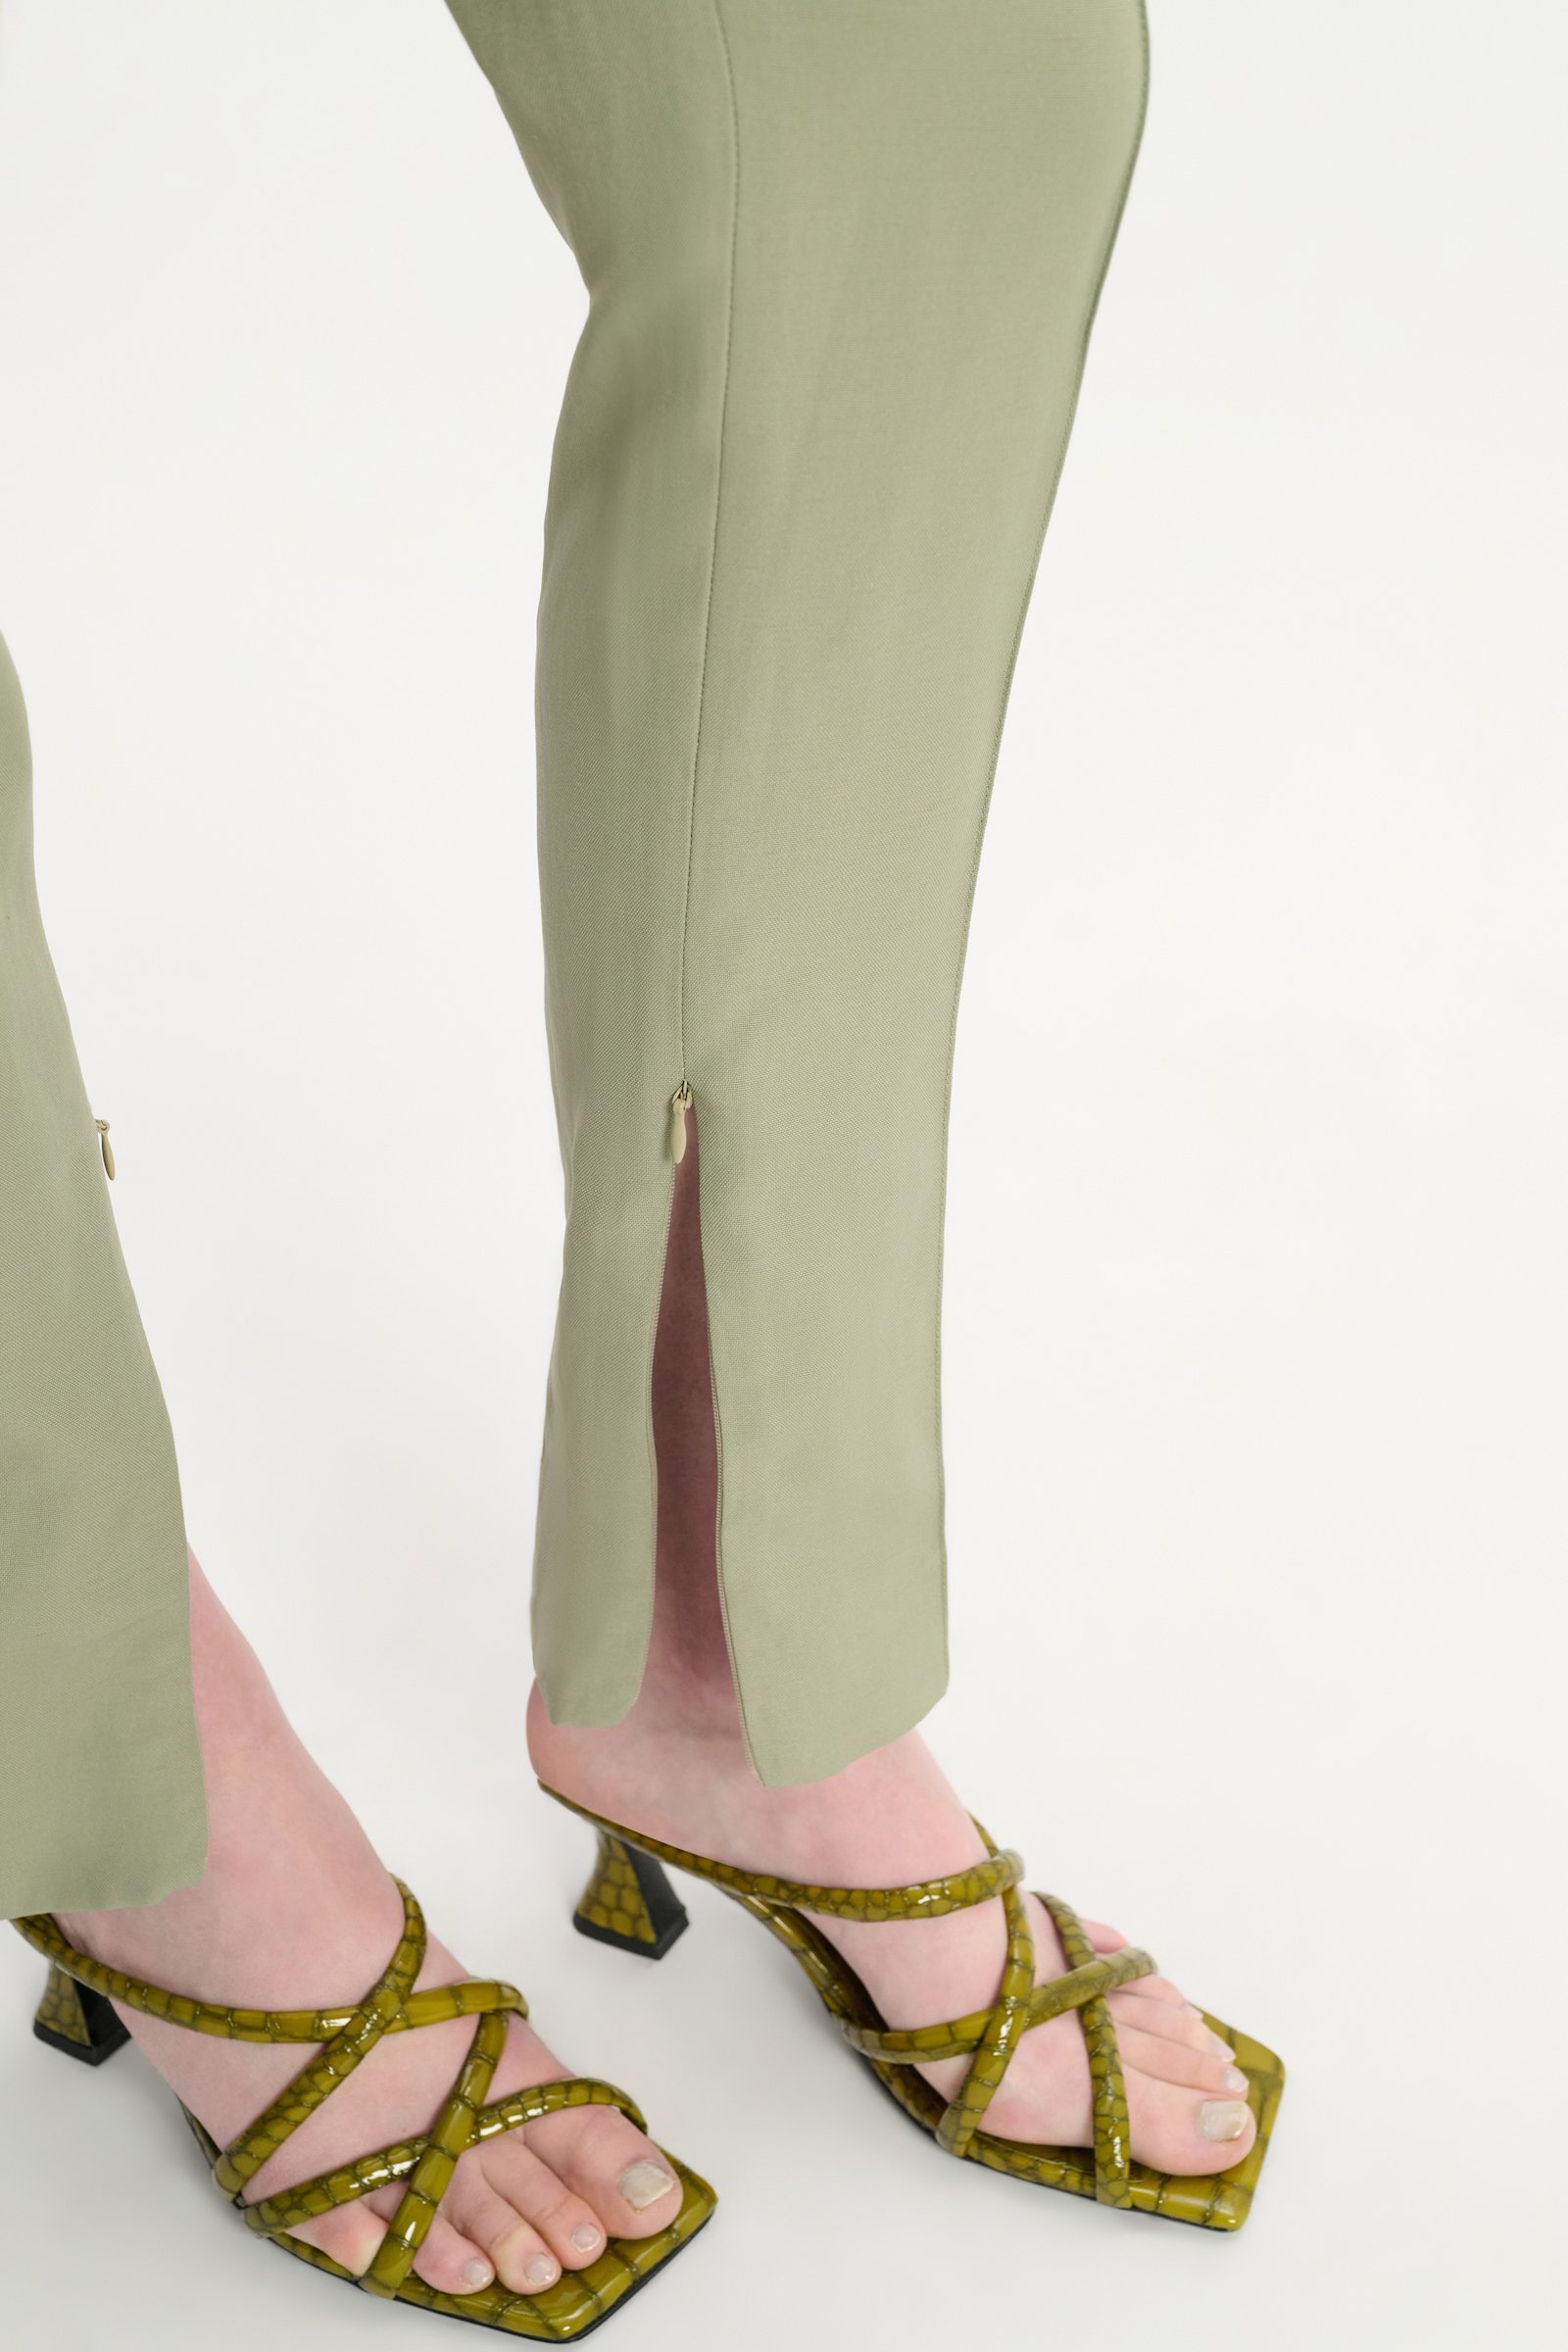 Dorothee Schumacher Slim fit linen blend pants with pintucks pale khaki